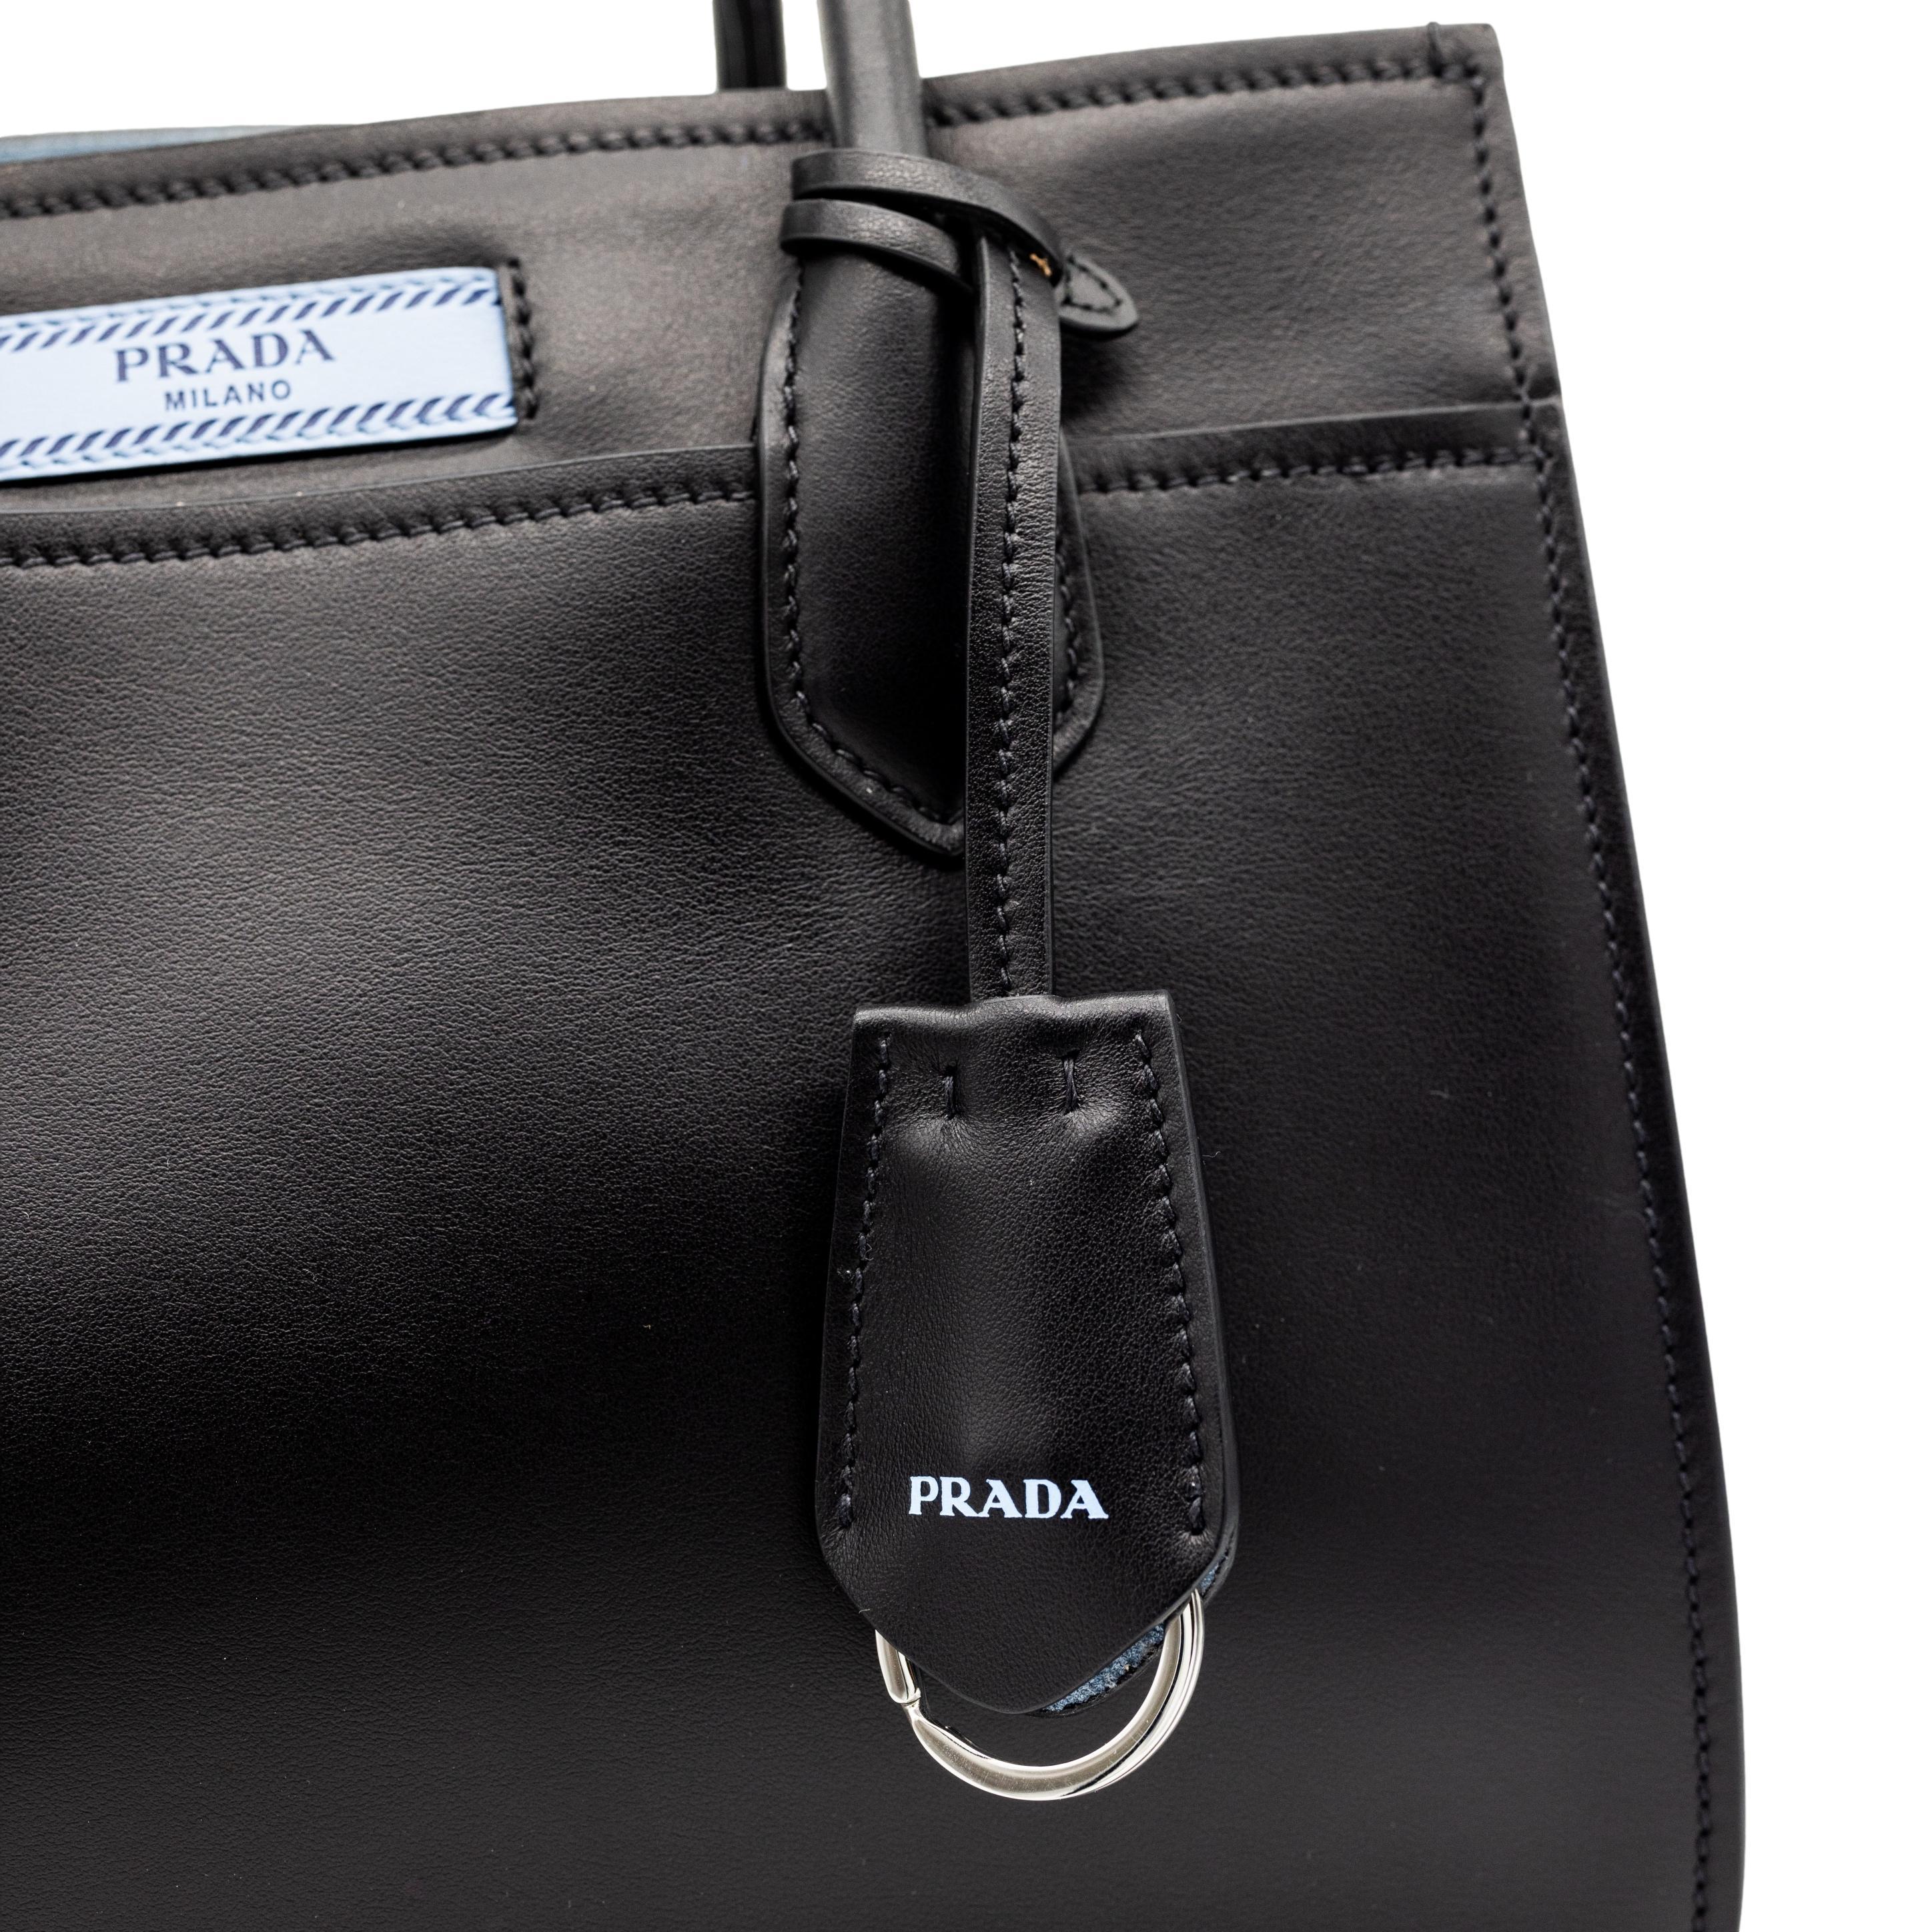 Prada Black City Calfskin Leather Etiquette Small Tote Crossbody Bag, 2018. The 